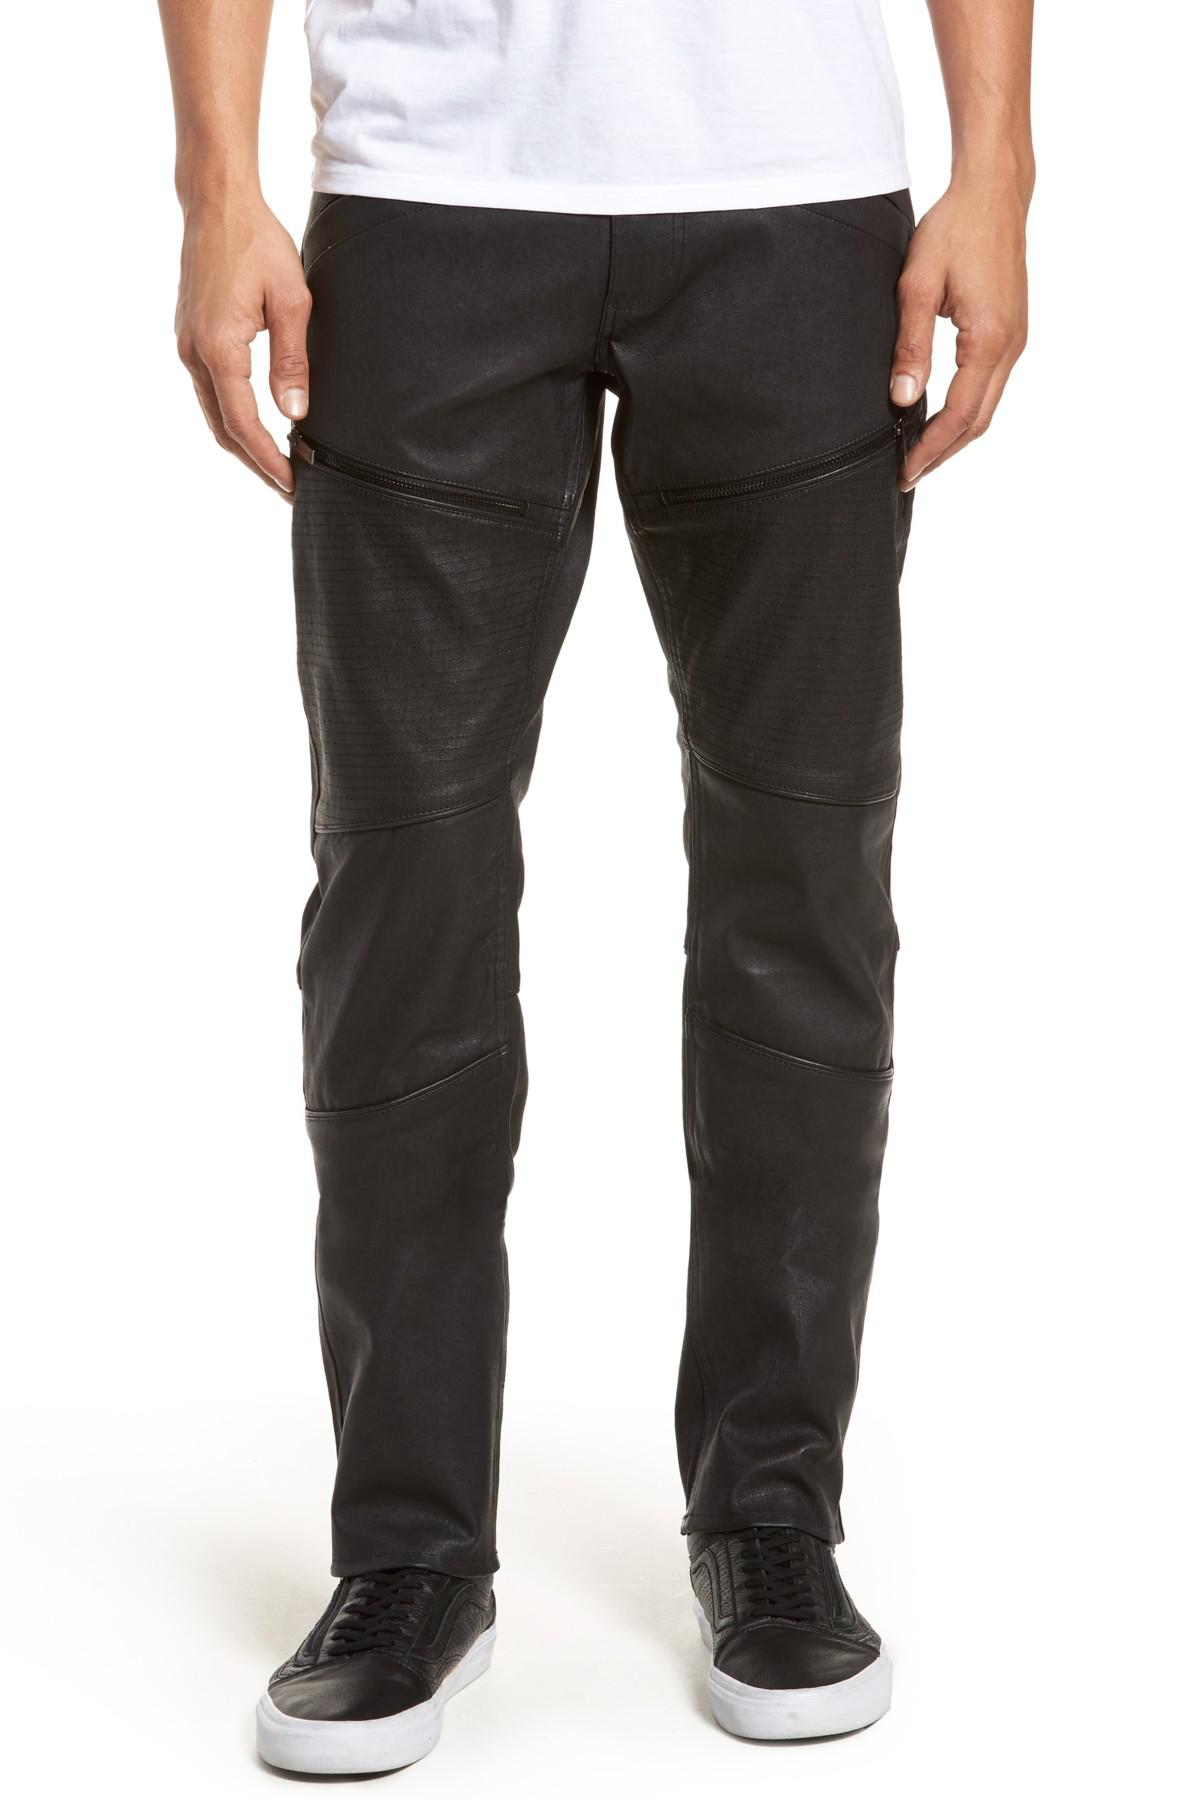 Straight leg black trousers for women with logo - CALVIN KLEIN JEANS -  Pavidas